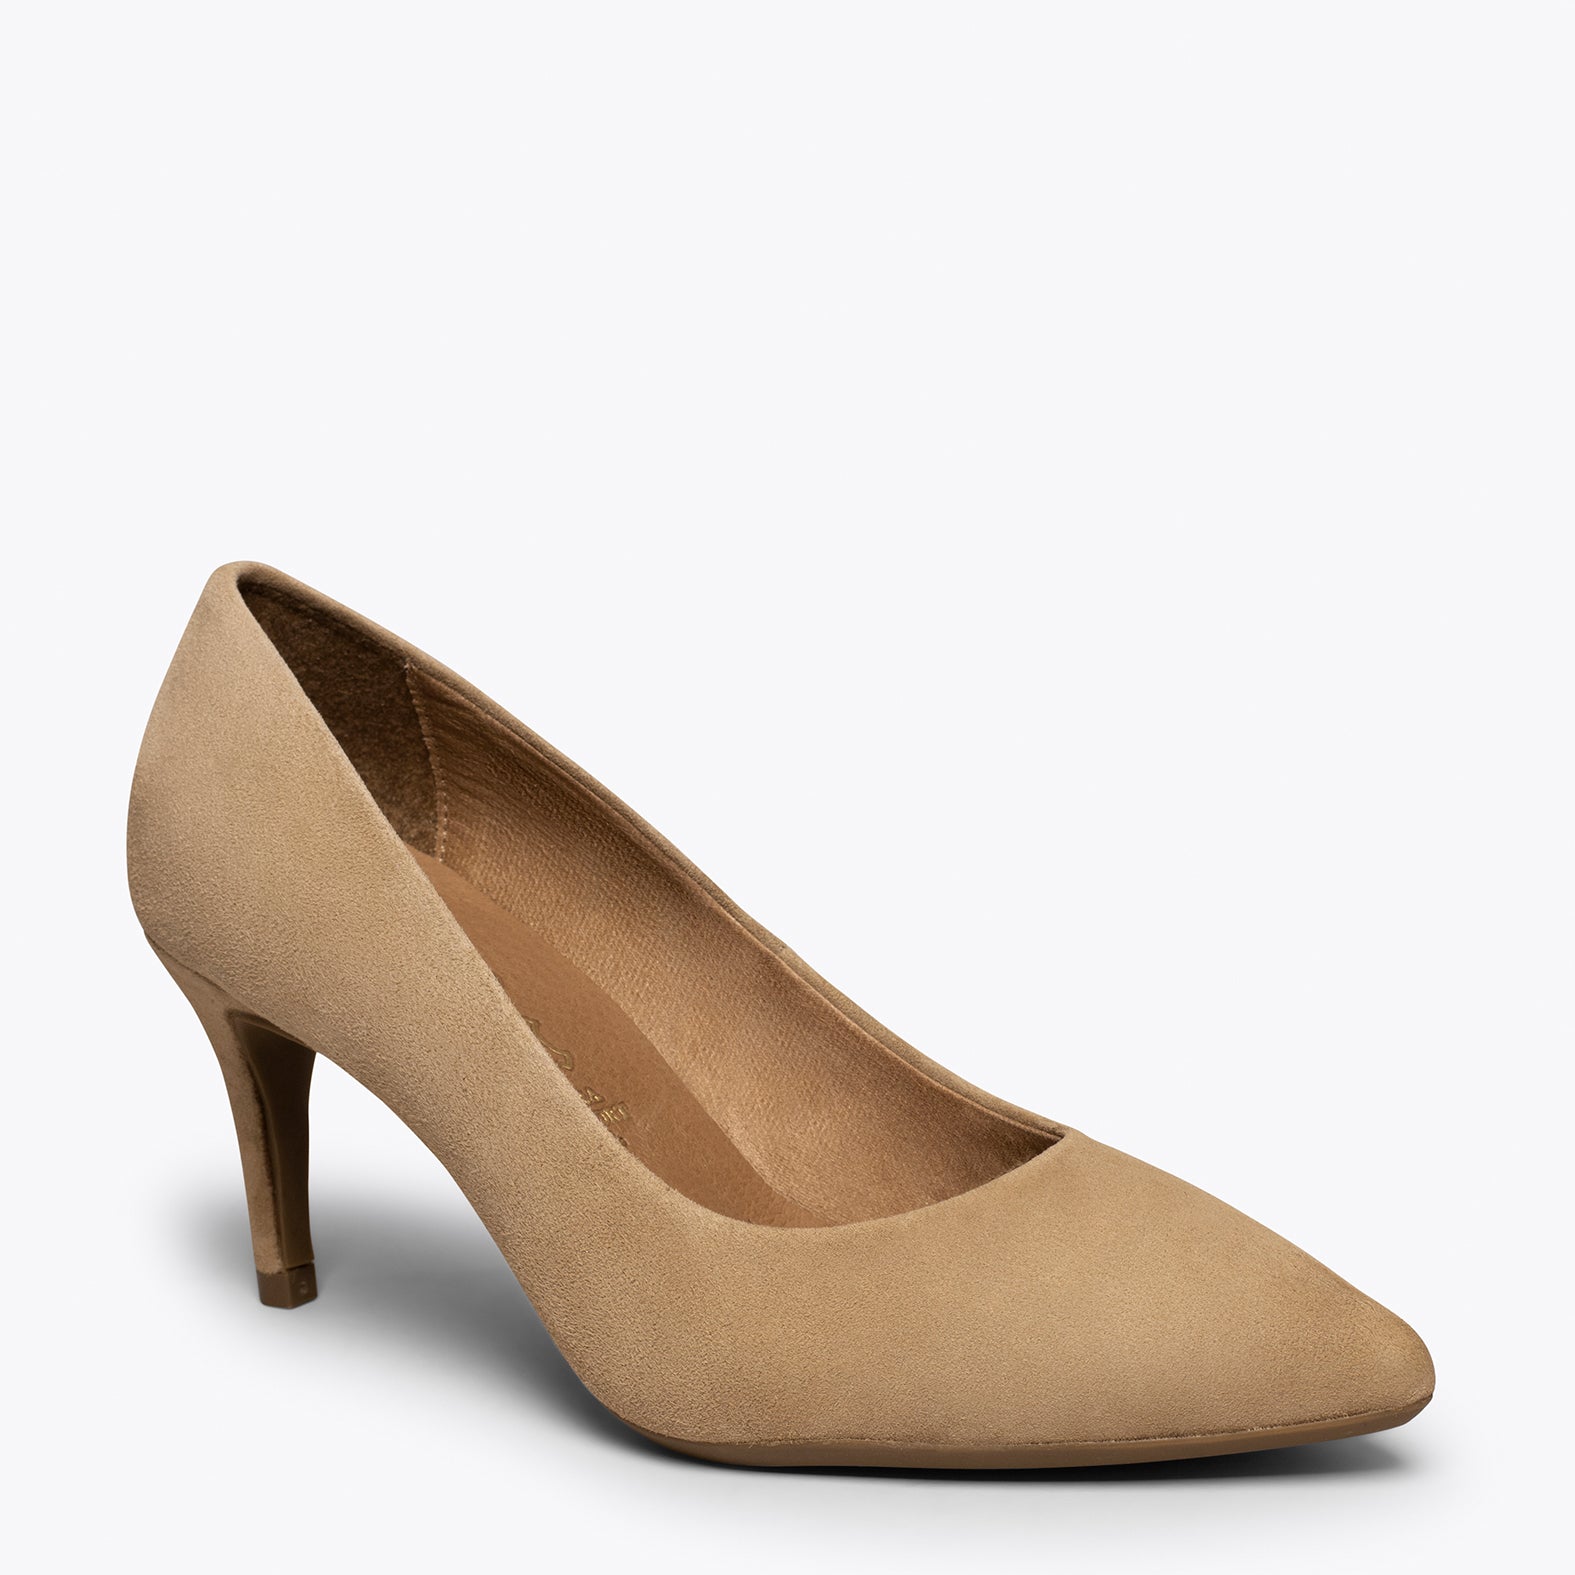 STILETTO – BEIGE stiletto mid heel